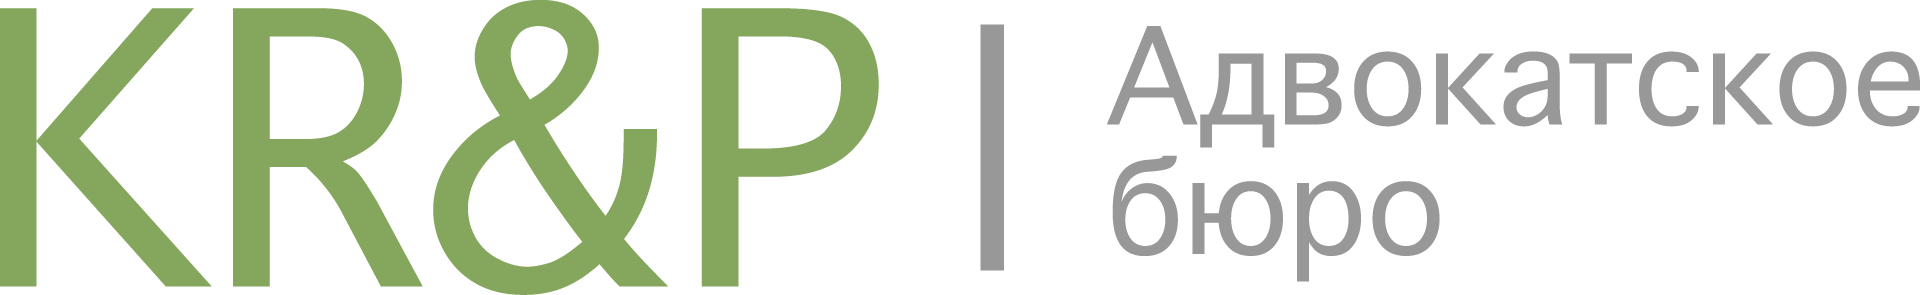 logo-multilang-1.png